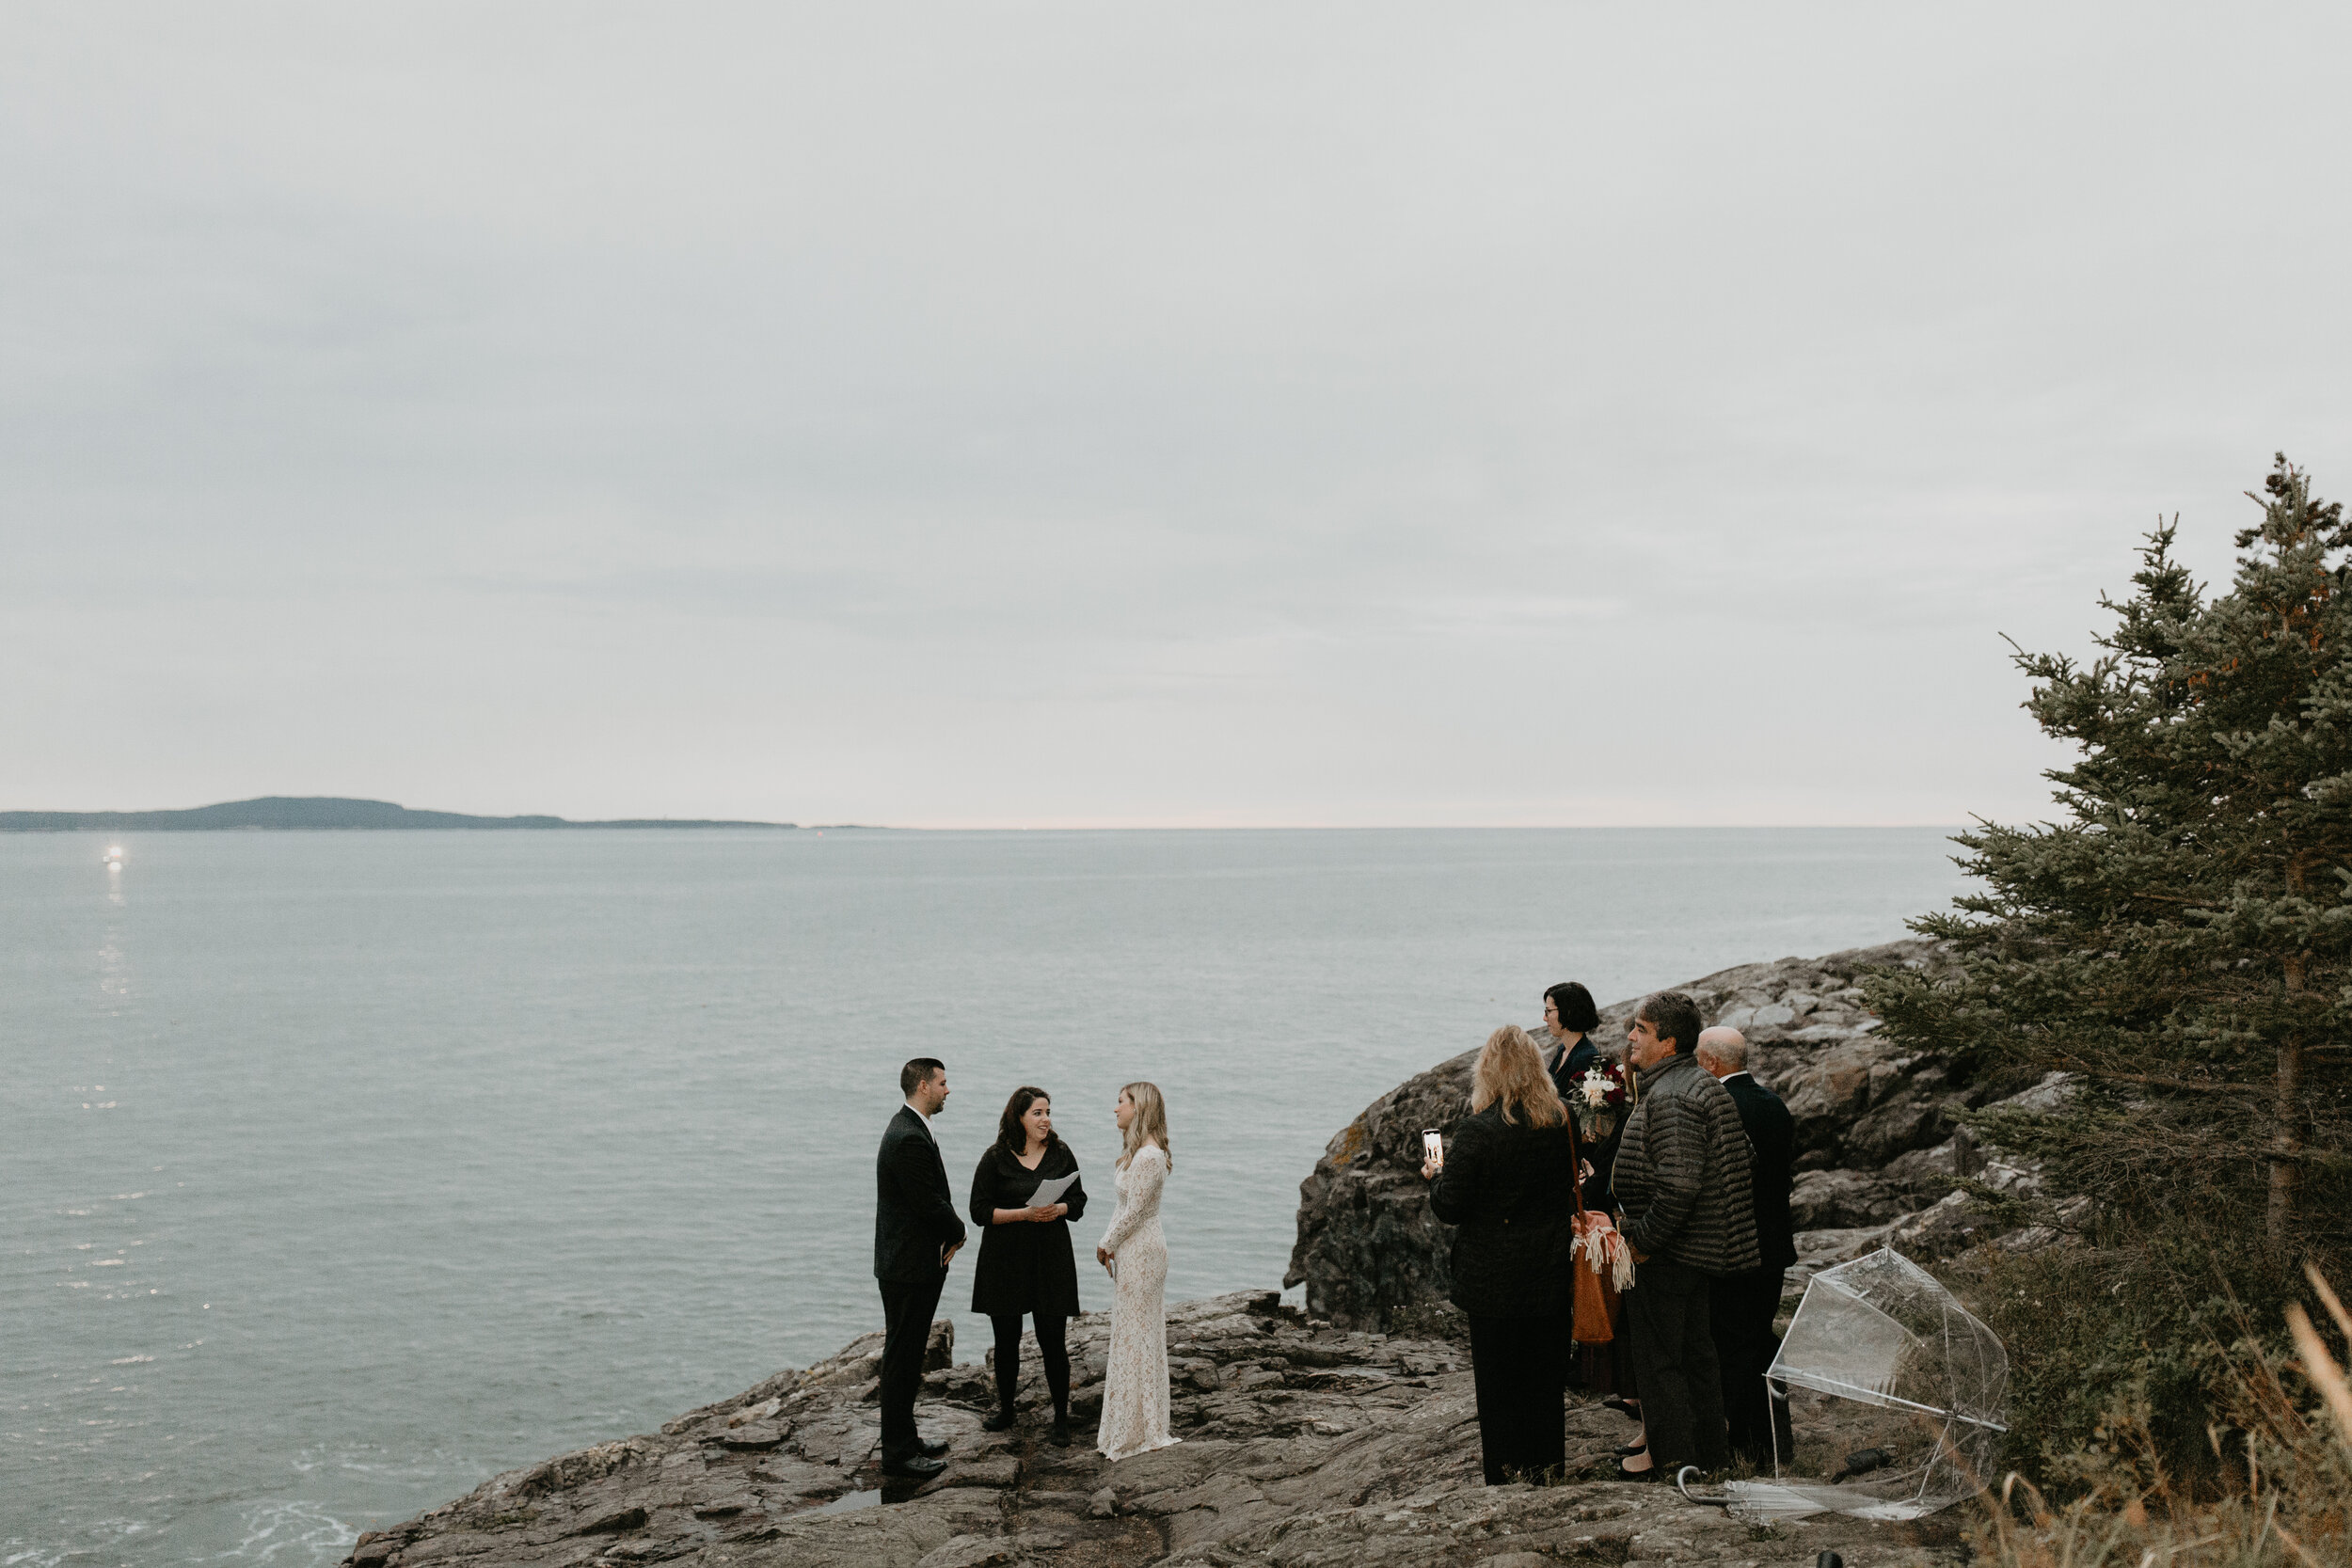 Nicole-Daacke-Photography-Acadia-national-park-elopement-photography-elopement-in-acadia-inspiration-maine-intimate-wedding-destination-elopement-photographer-rainy-day-maine-coast-bar-harbor-elopement-photography-112.jpg